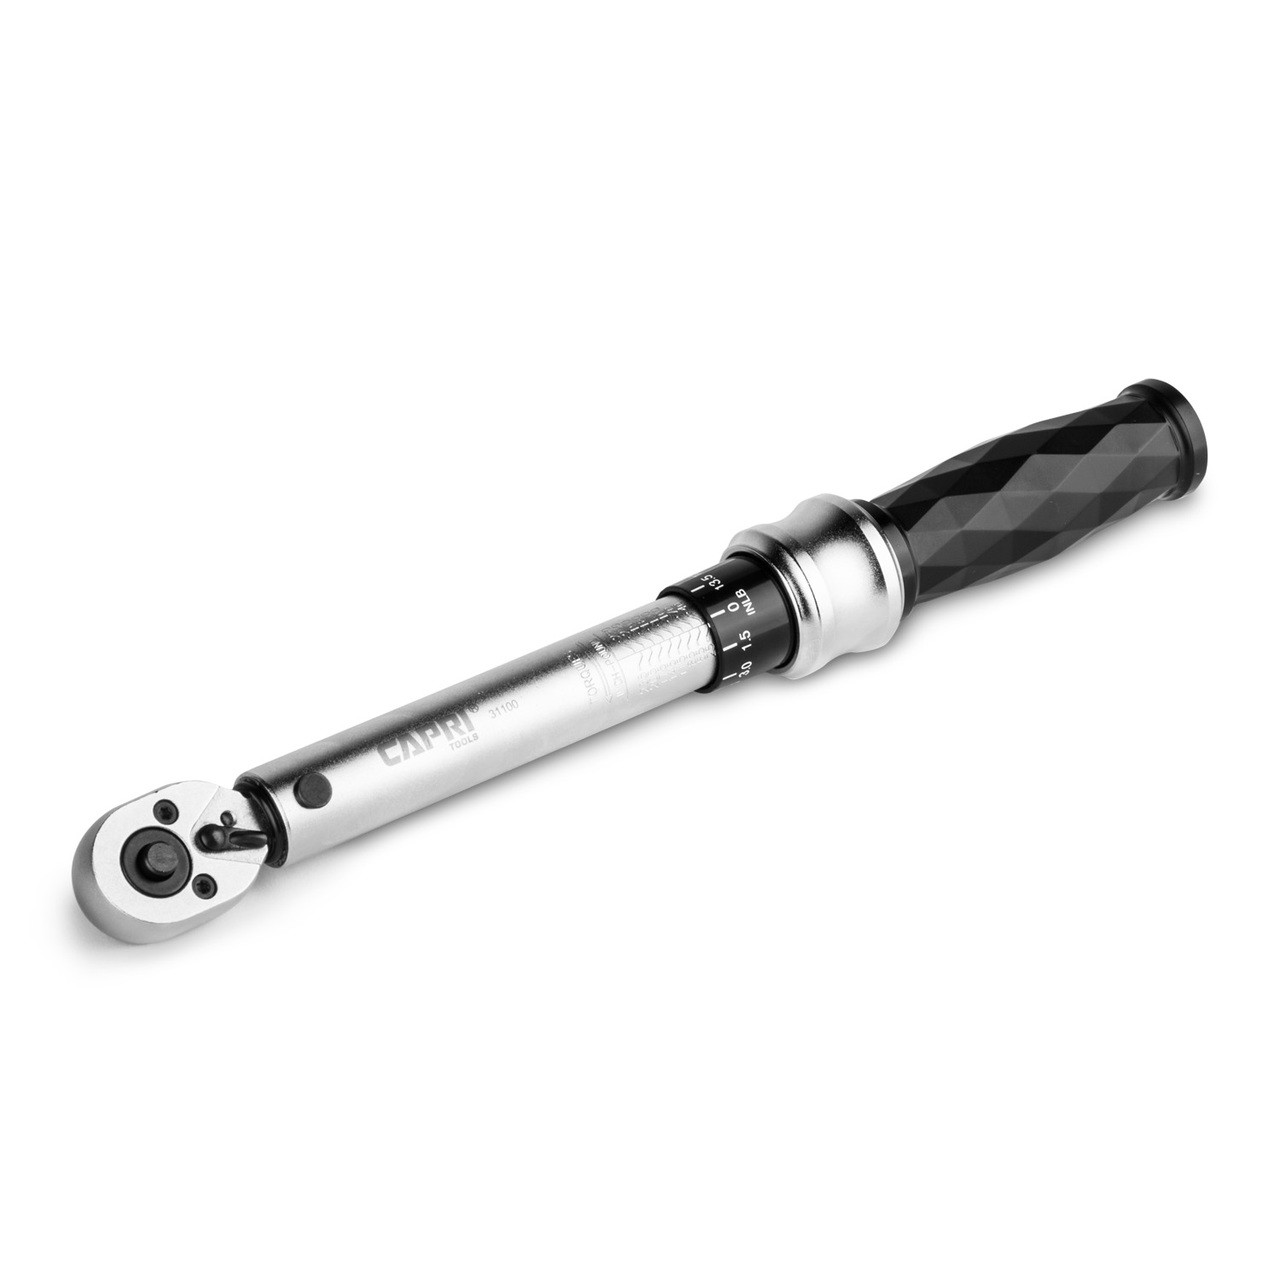 Capri Tools 55-250 Inch Pound Diamond Ergonomic Grip Torque Wrench, 1/4 inch Drive